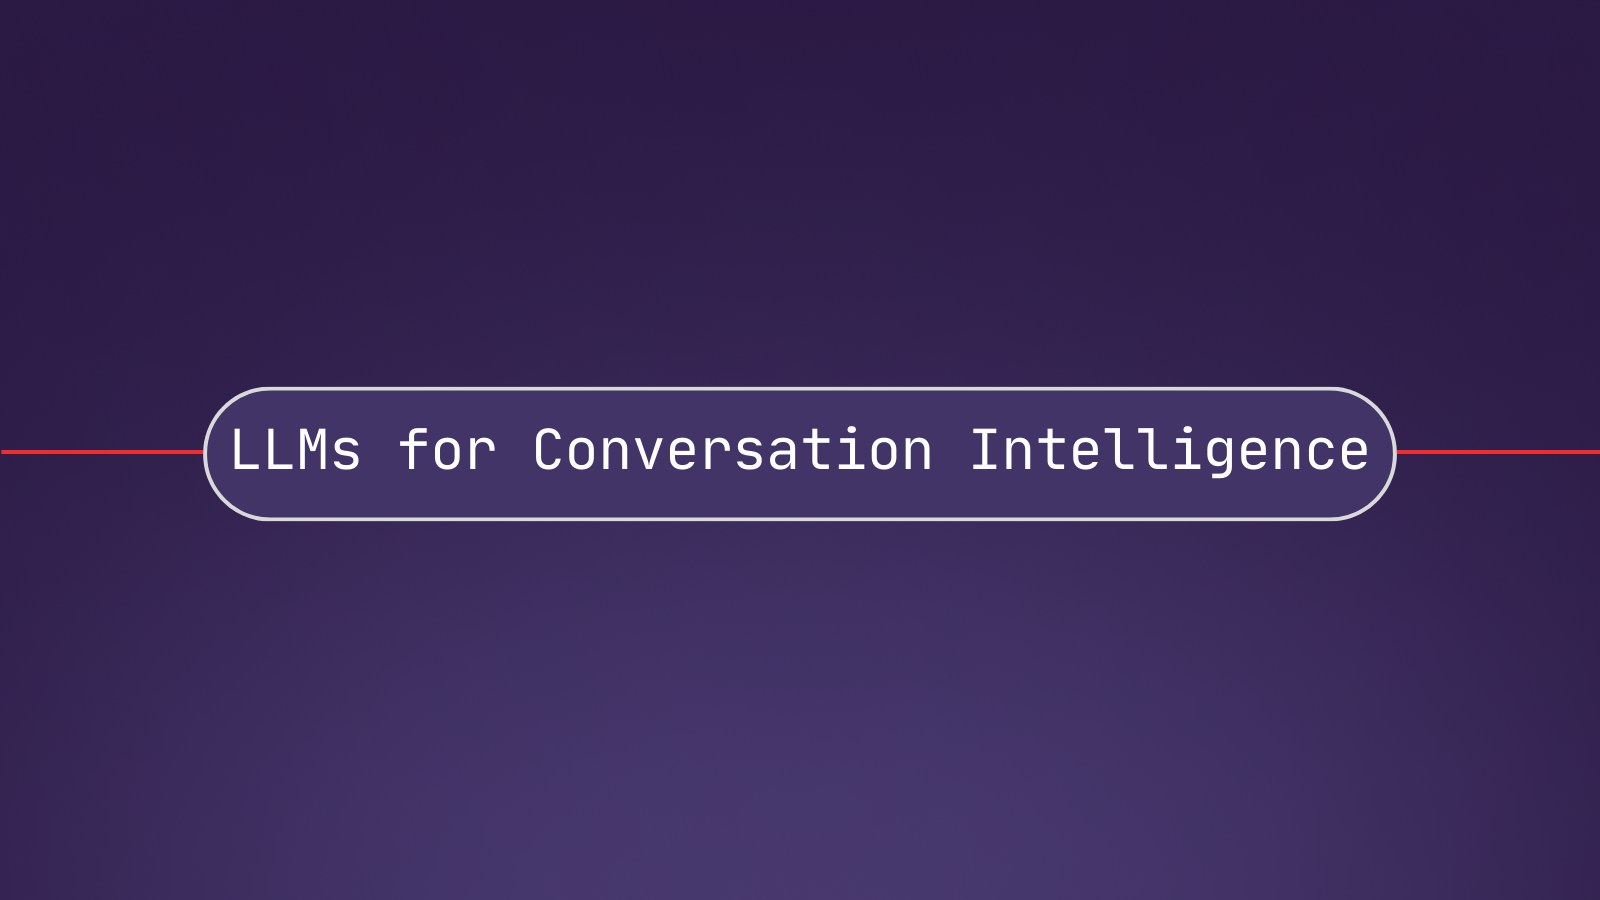 Top 6 benefits of integrating LLMs for Conversation Intelligence platforms